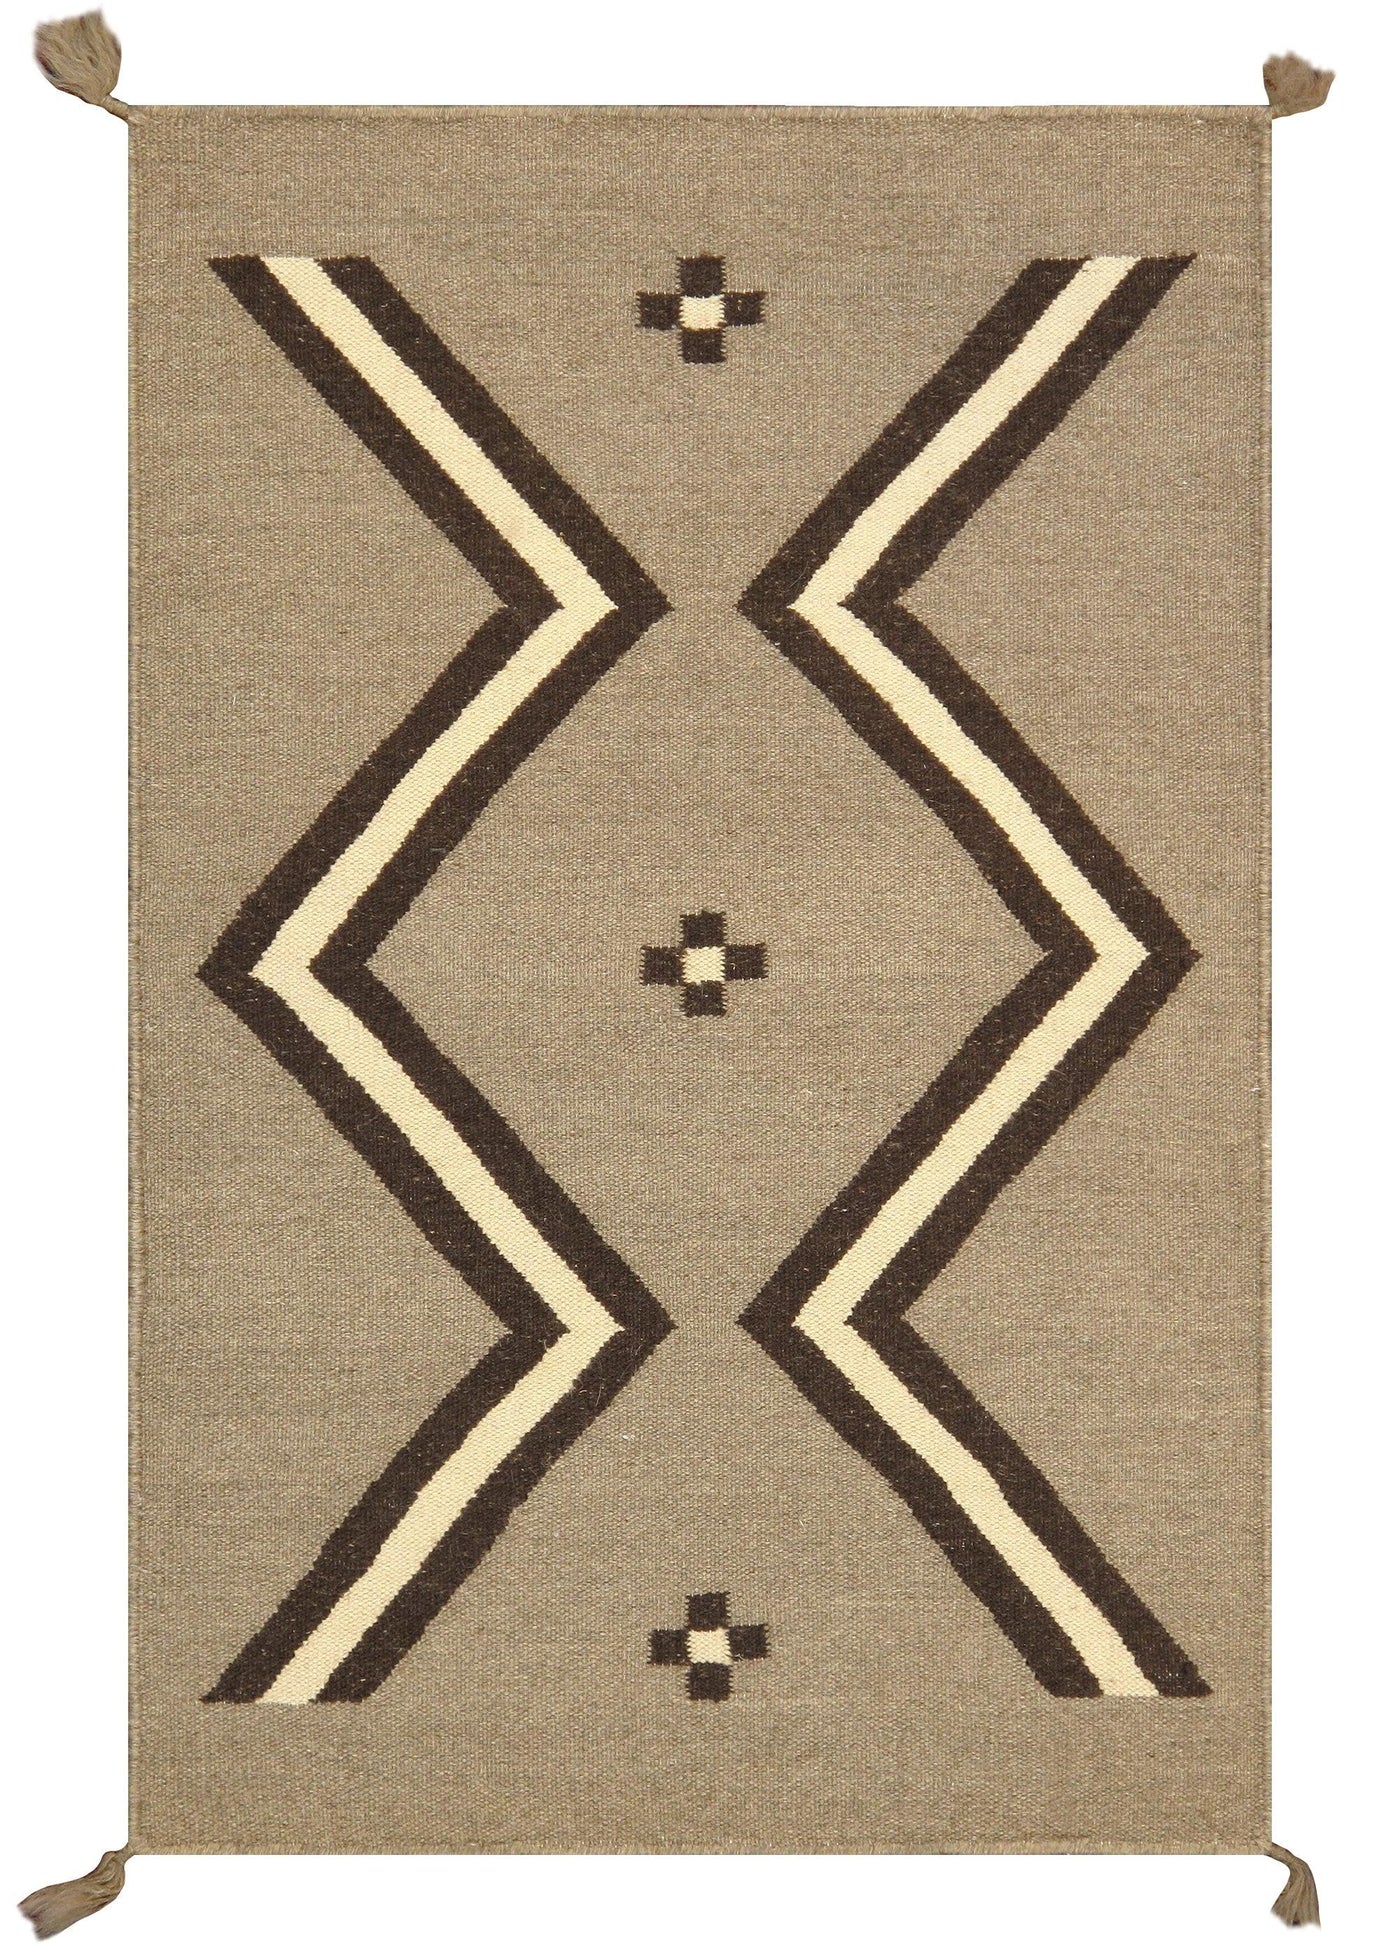 Canvello Navajo Style Hand-Woven Wool Mocha Area Rug- 2' X 3'1"